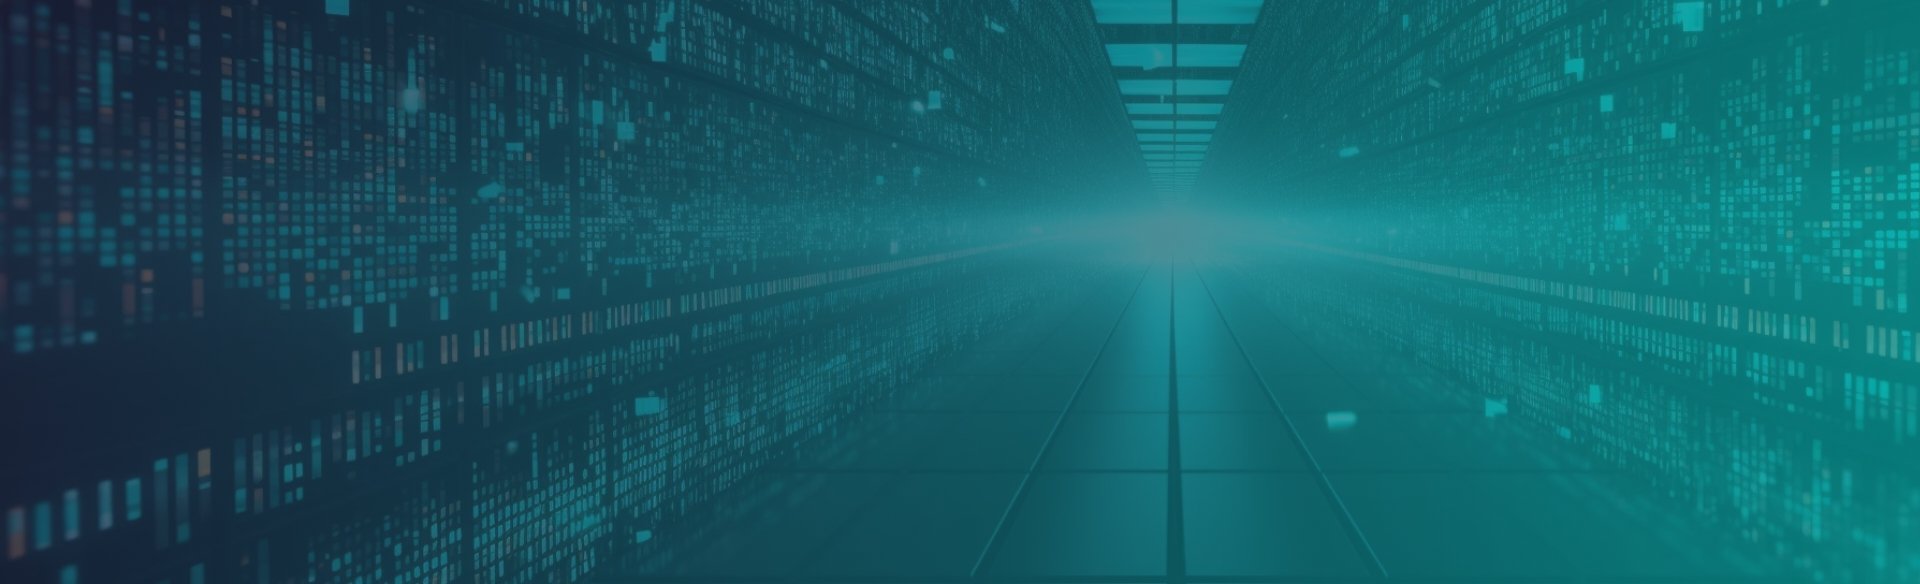 Data Science concept with digital data streams in a futuristic server room corridor